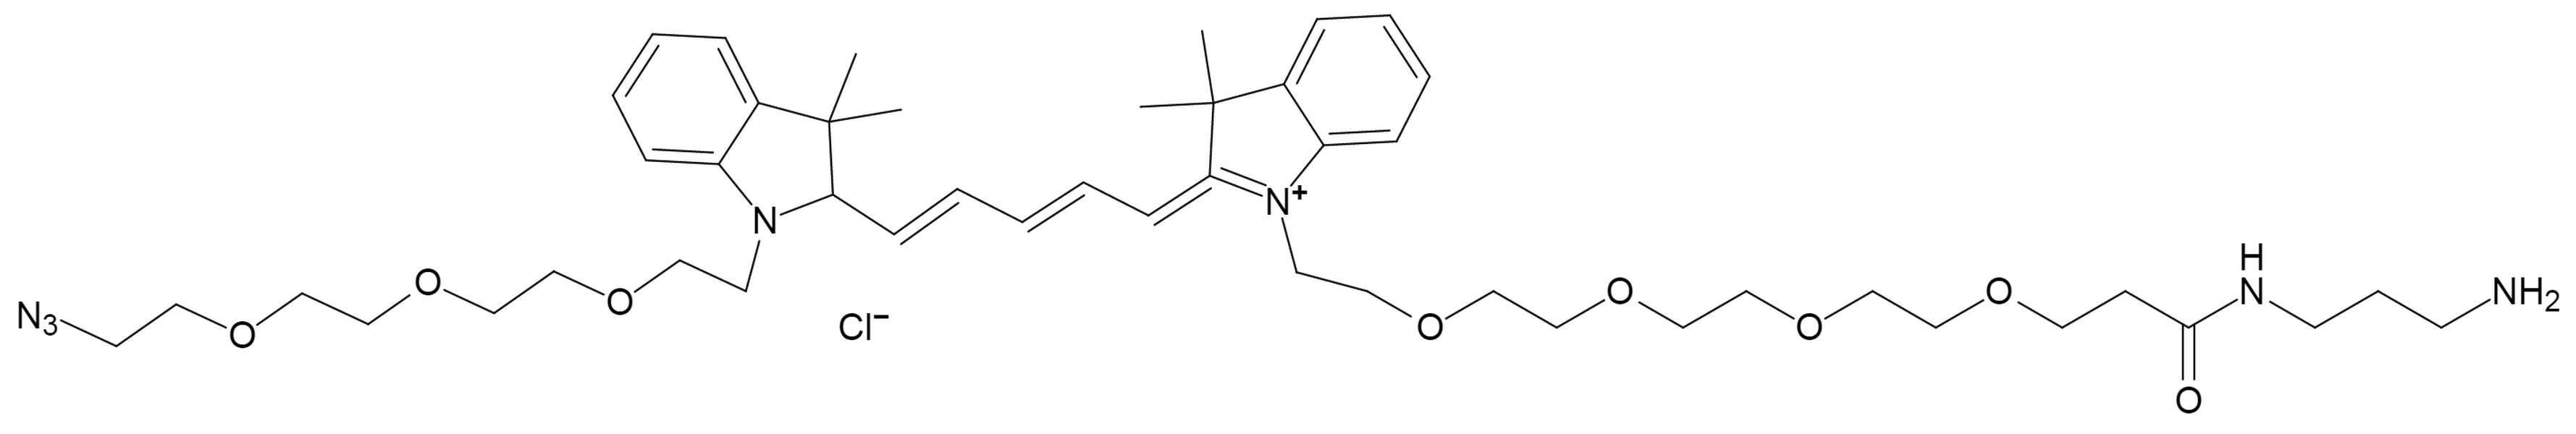 N-(azide-PEG3)-N'-(Amine-C3-PEG4)-Cy5